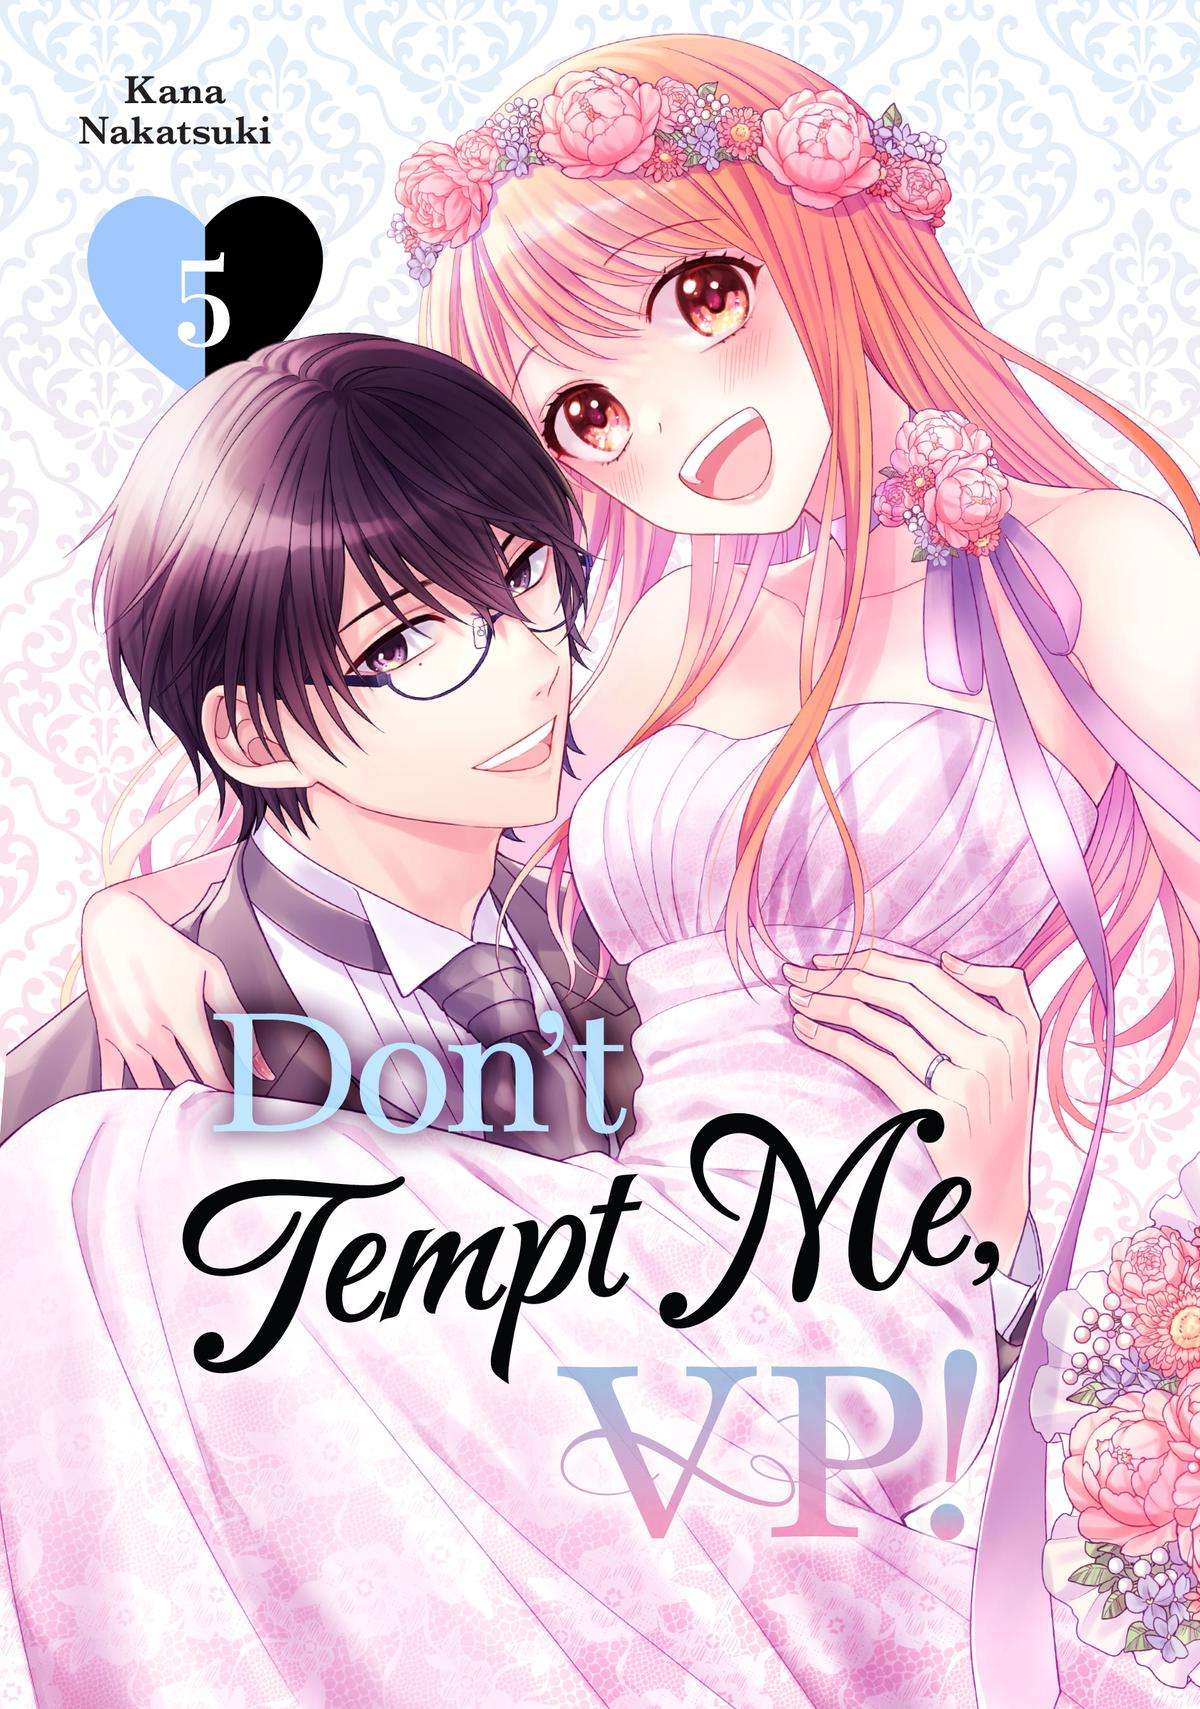 Don't Tempt Me, Vp! - chapter 17 - #1